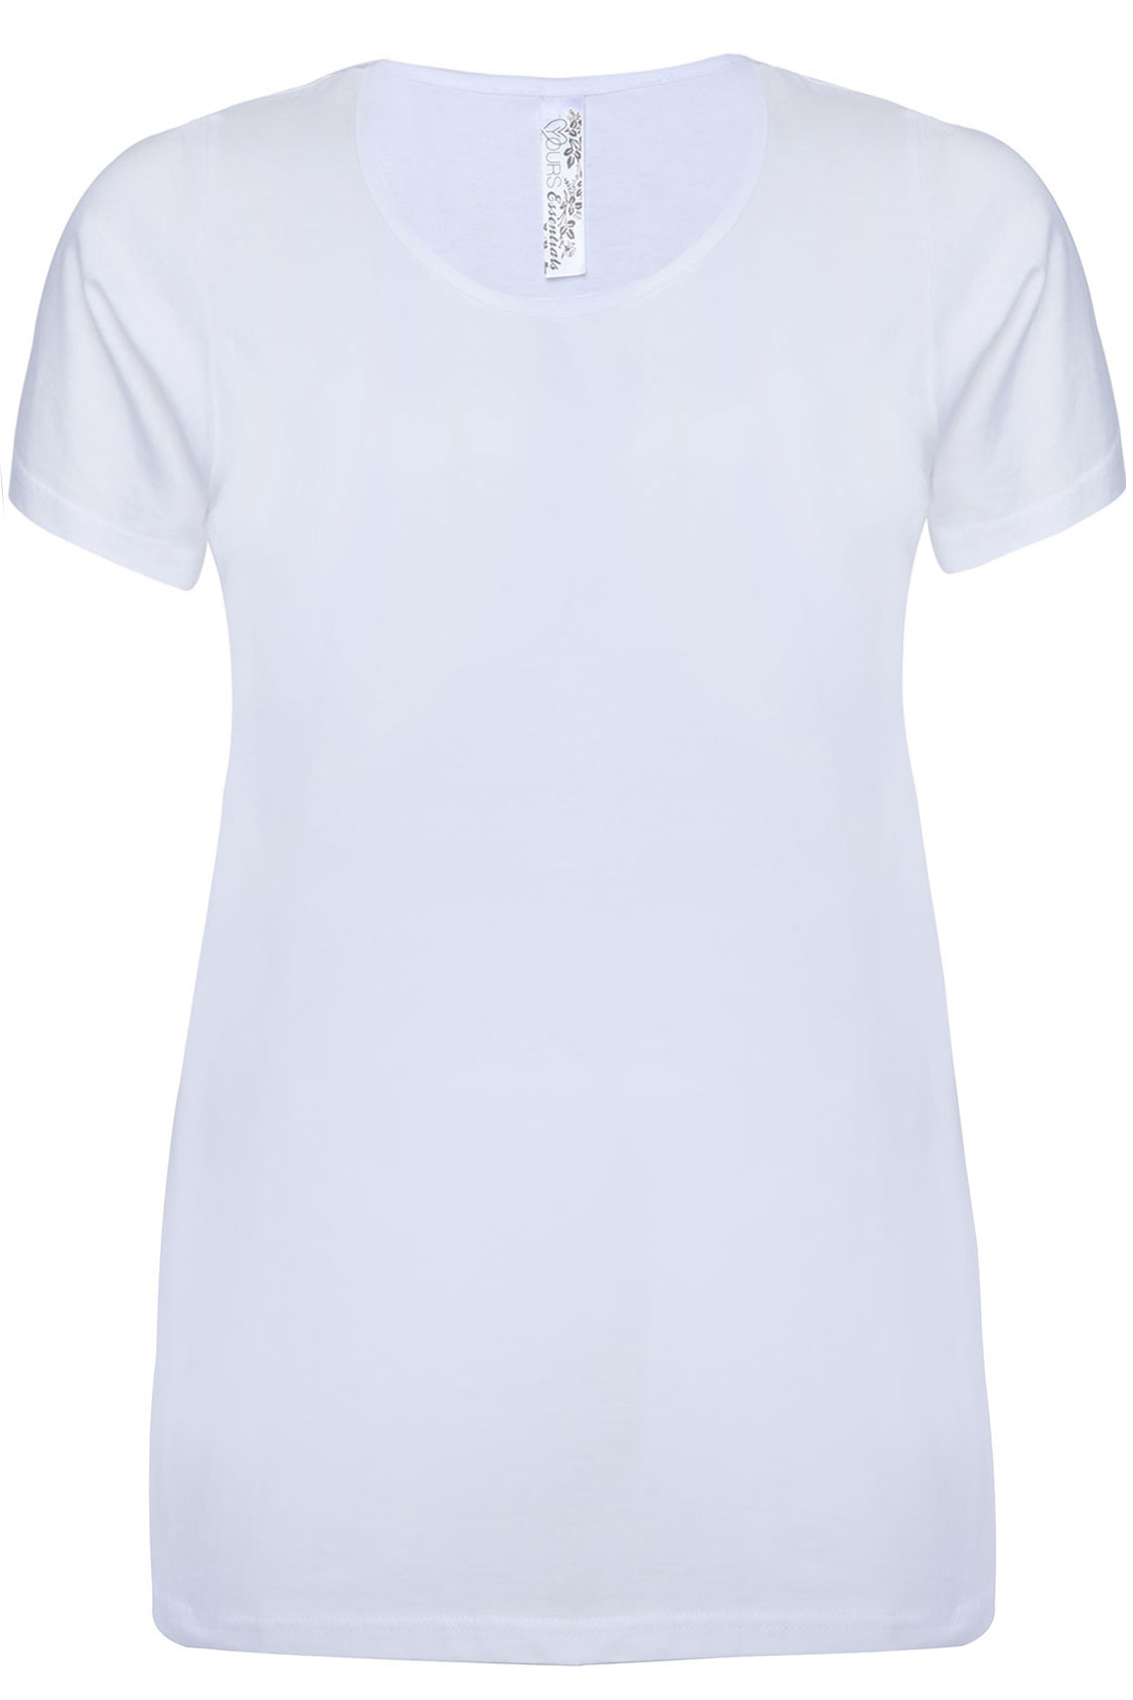 White Plain Basic Scoop Neck T-shirt WARDROBE ESSENTIAL plus Size 16 to 36